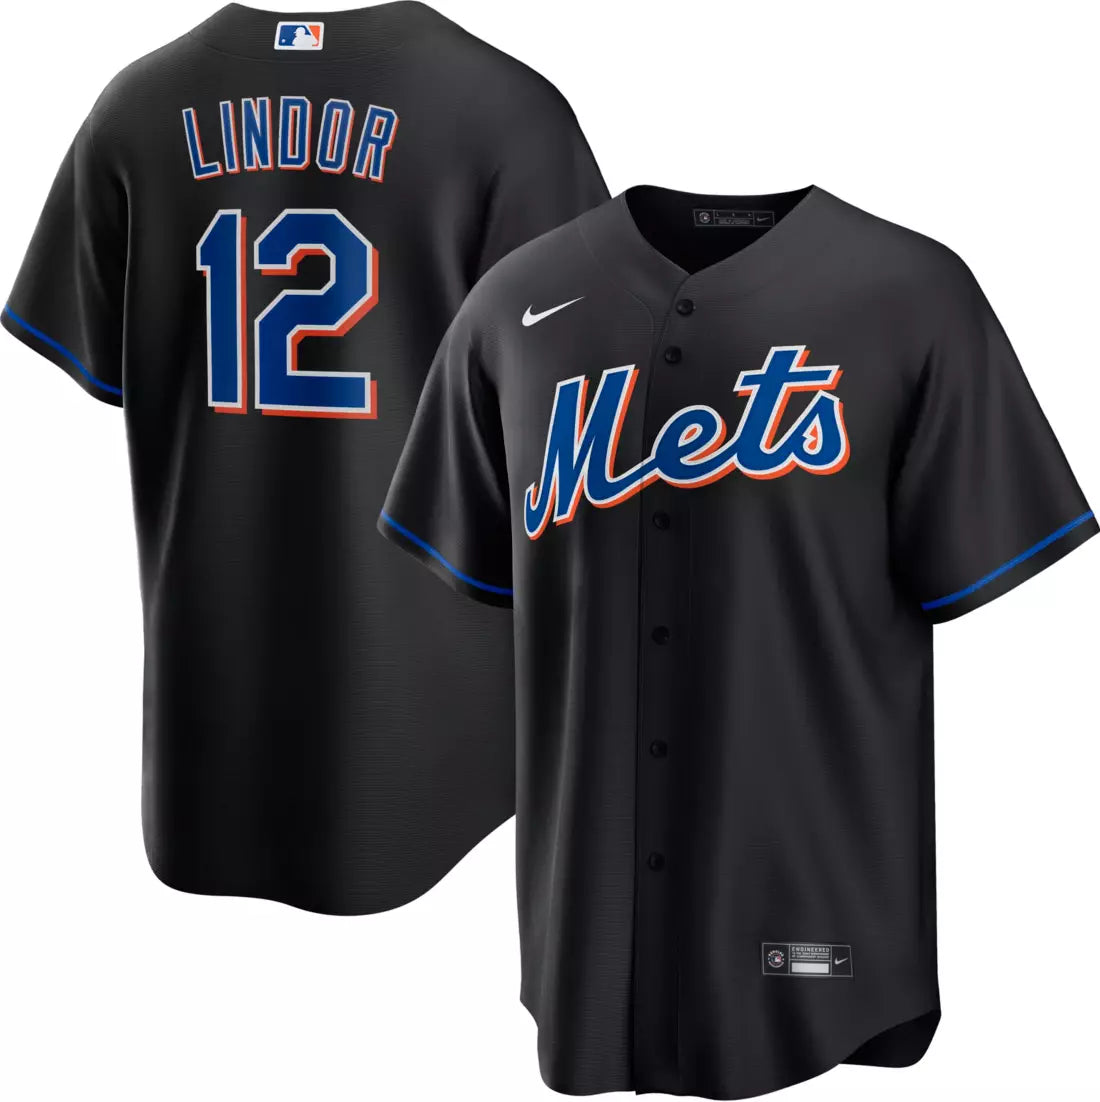 Francisco Lindor New York Mets Jersey - Black